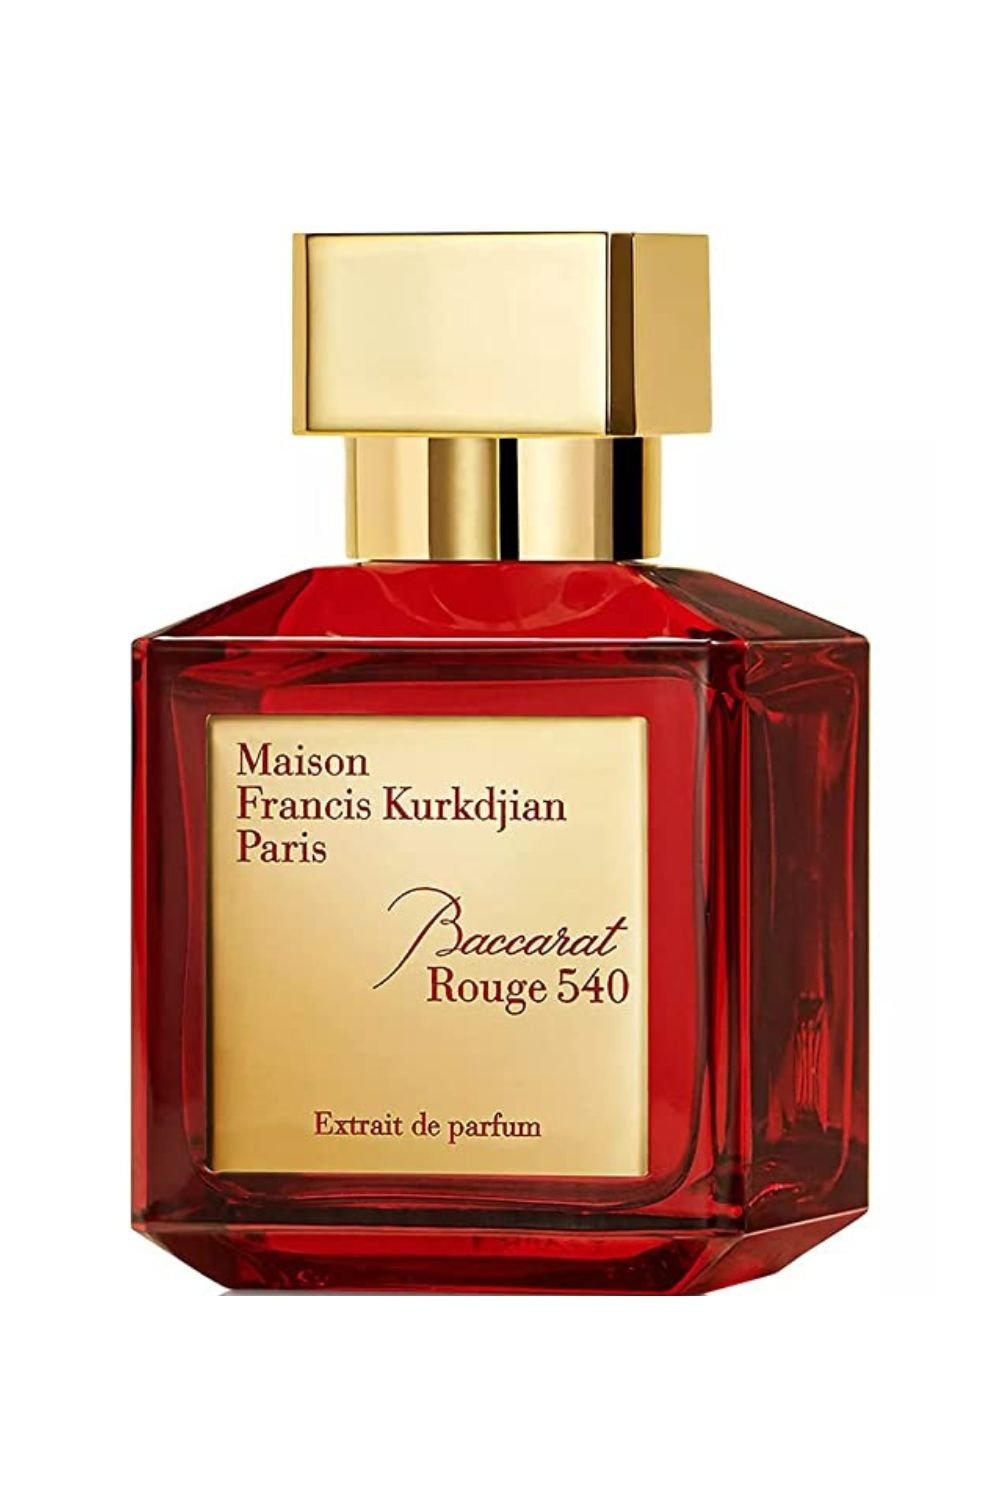 Maison Francis Kurkdjian Baccarat Rouge 540 Pure Perfume